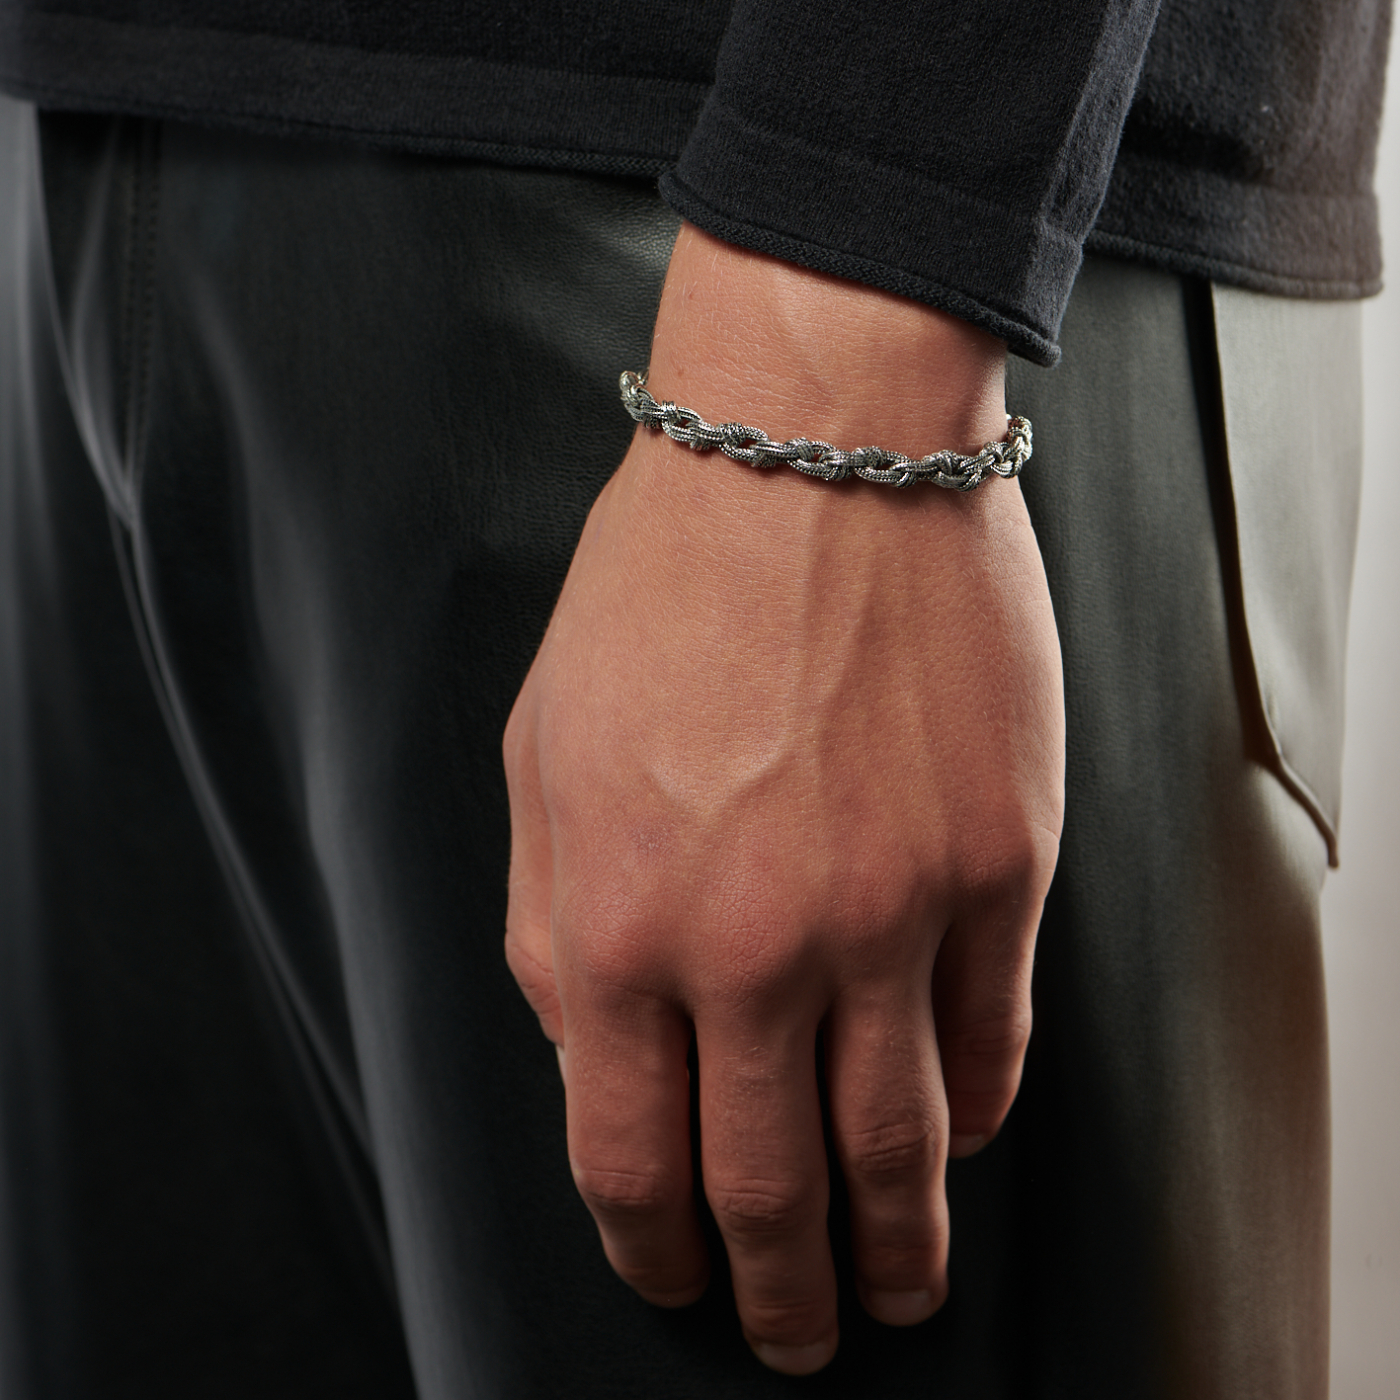 Emanuele Bicocchi zirconia chain bracelet - Silver